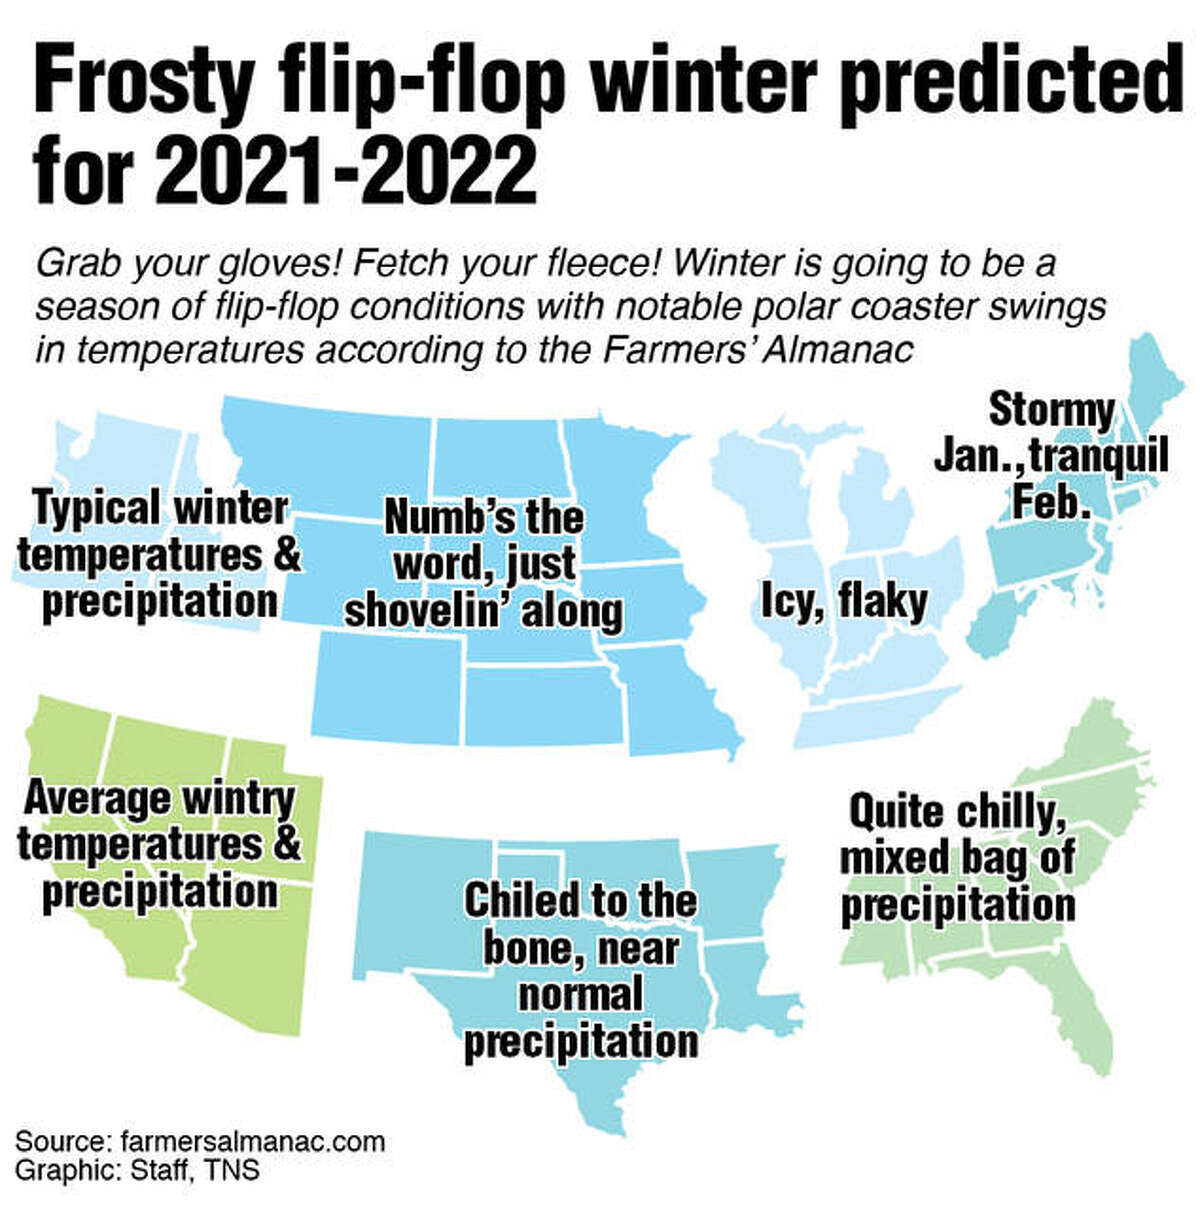 Winter Forecast 2021-2022